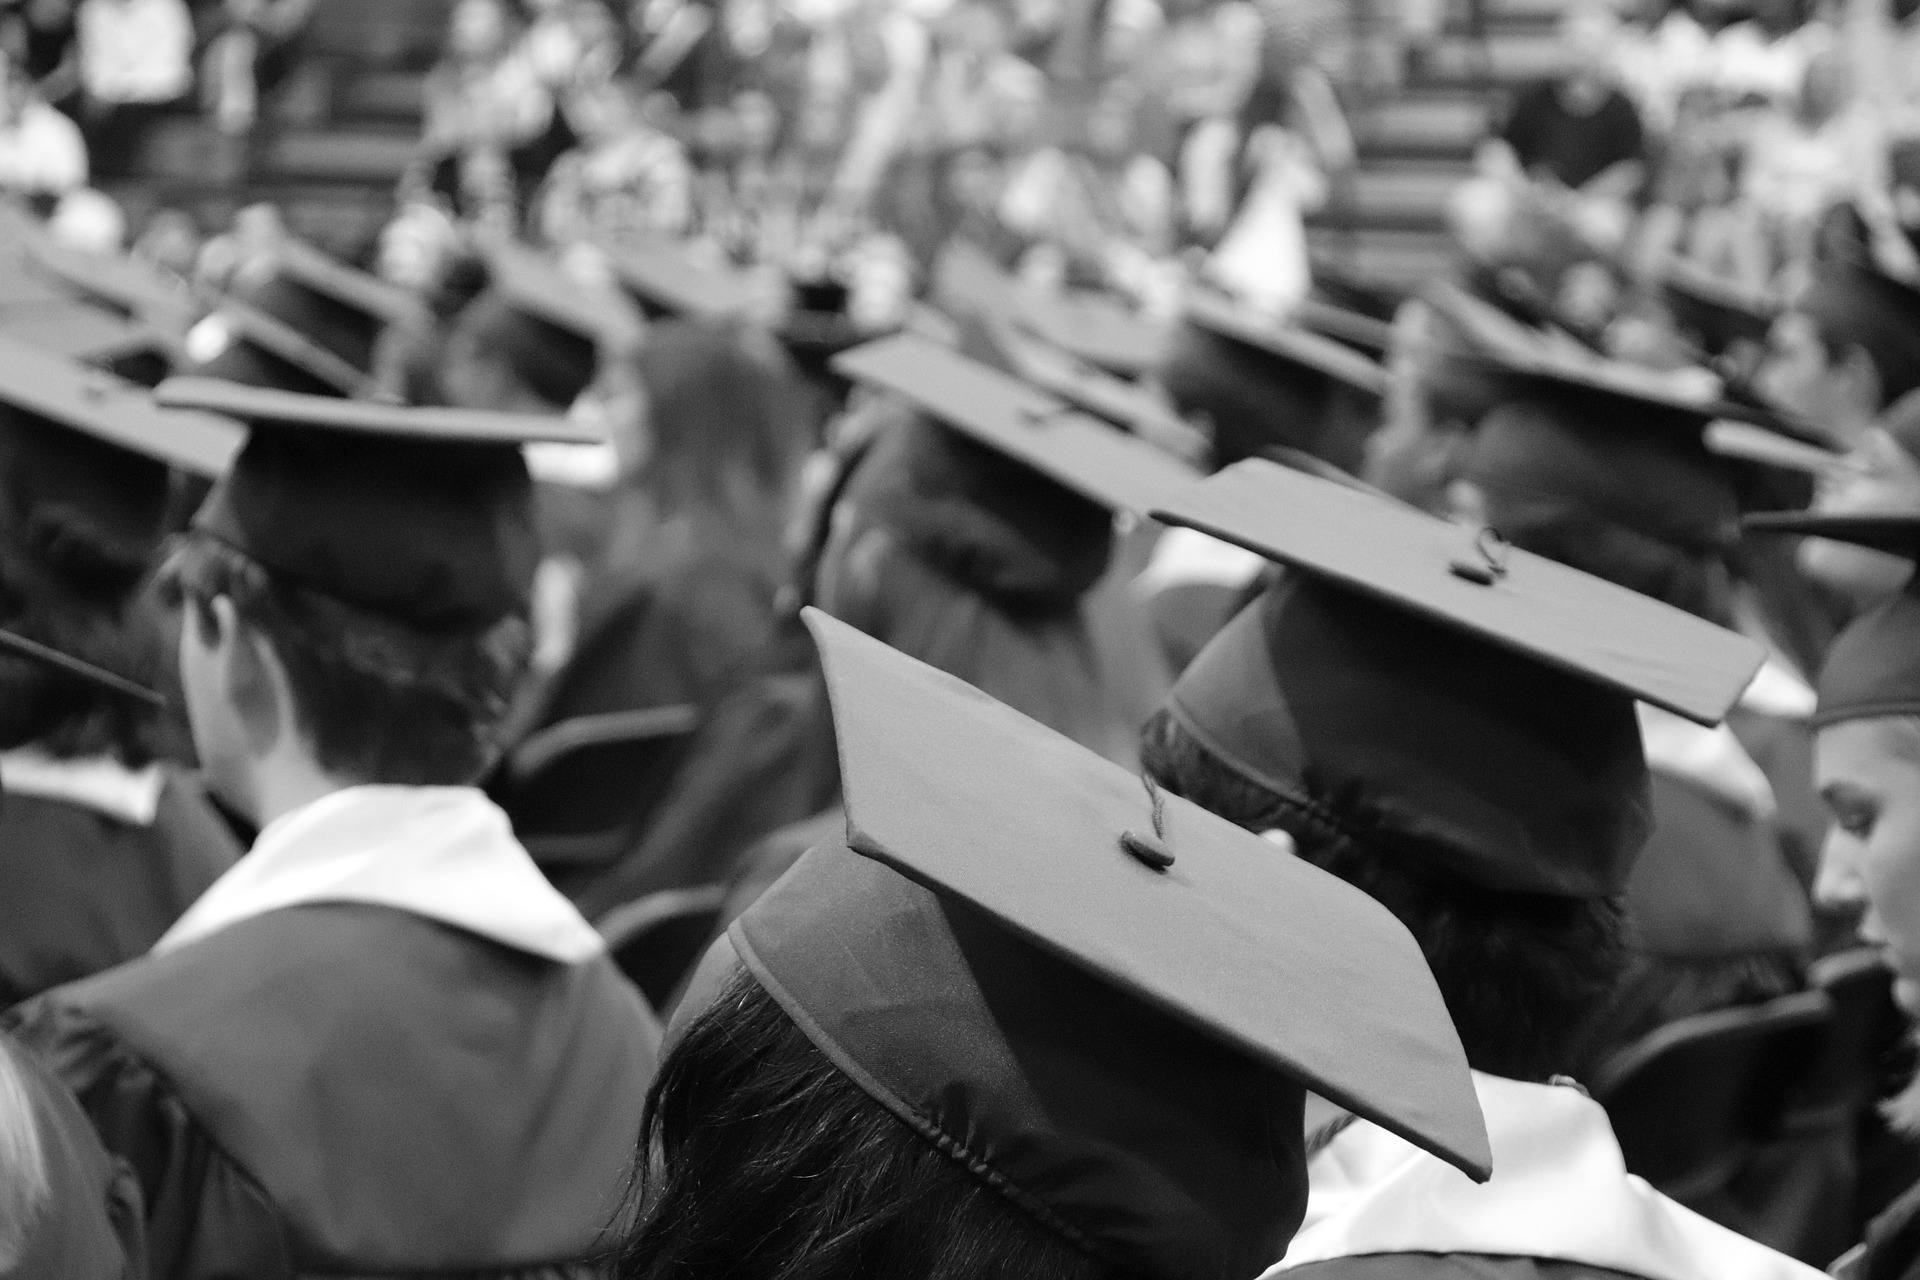 Employable graduates with graduation caps